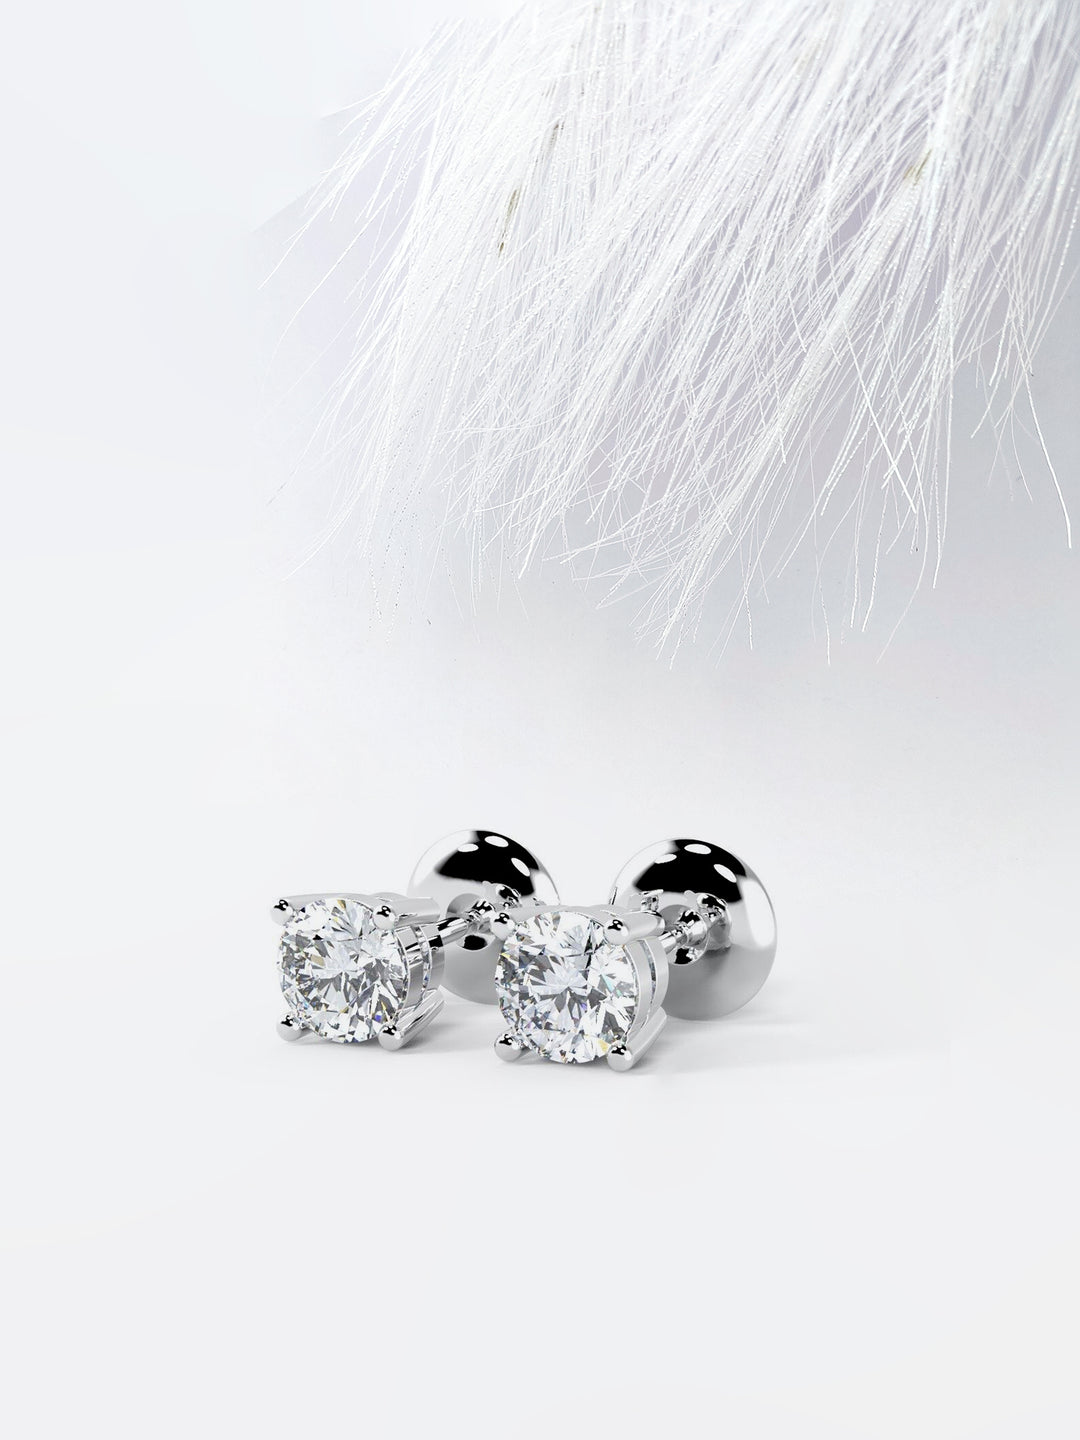 0.50CT Round Cut Moissanite Diamond Stud Earrings in White Gold